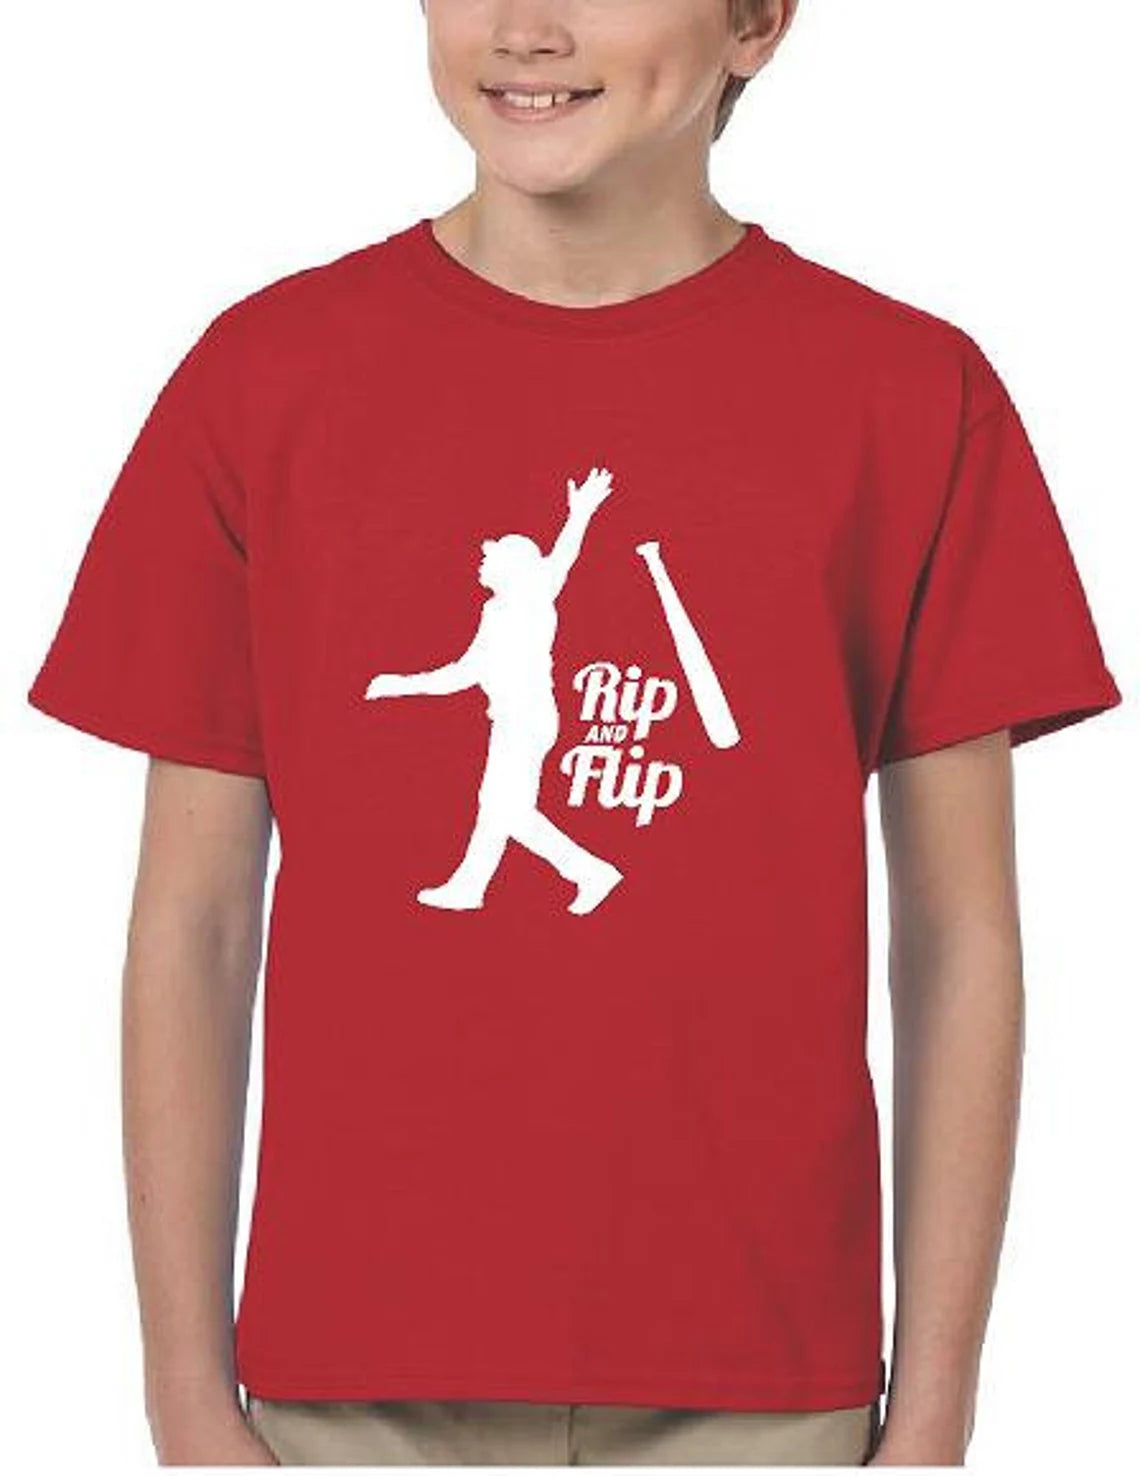 Baseball Shirts | Boys Graphic Baseball Tee L / Royal